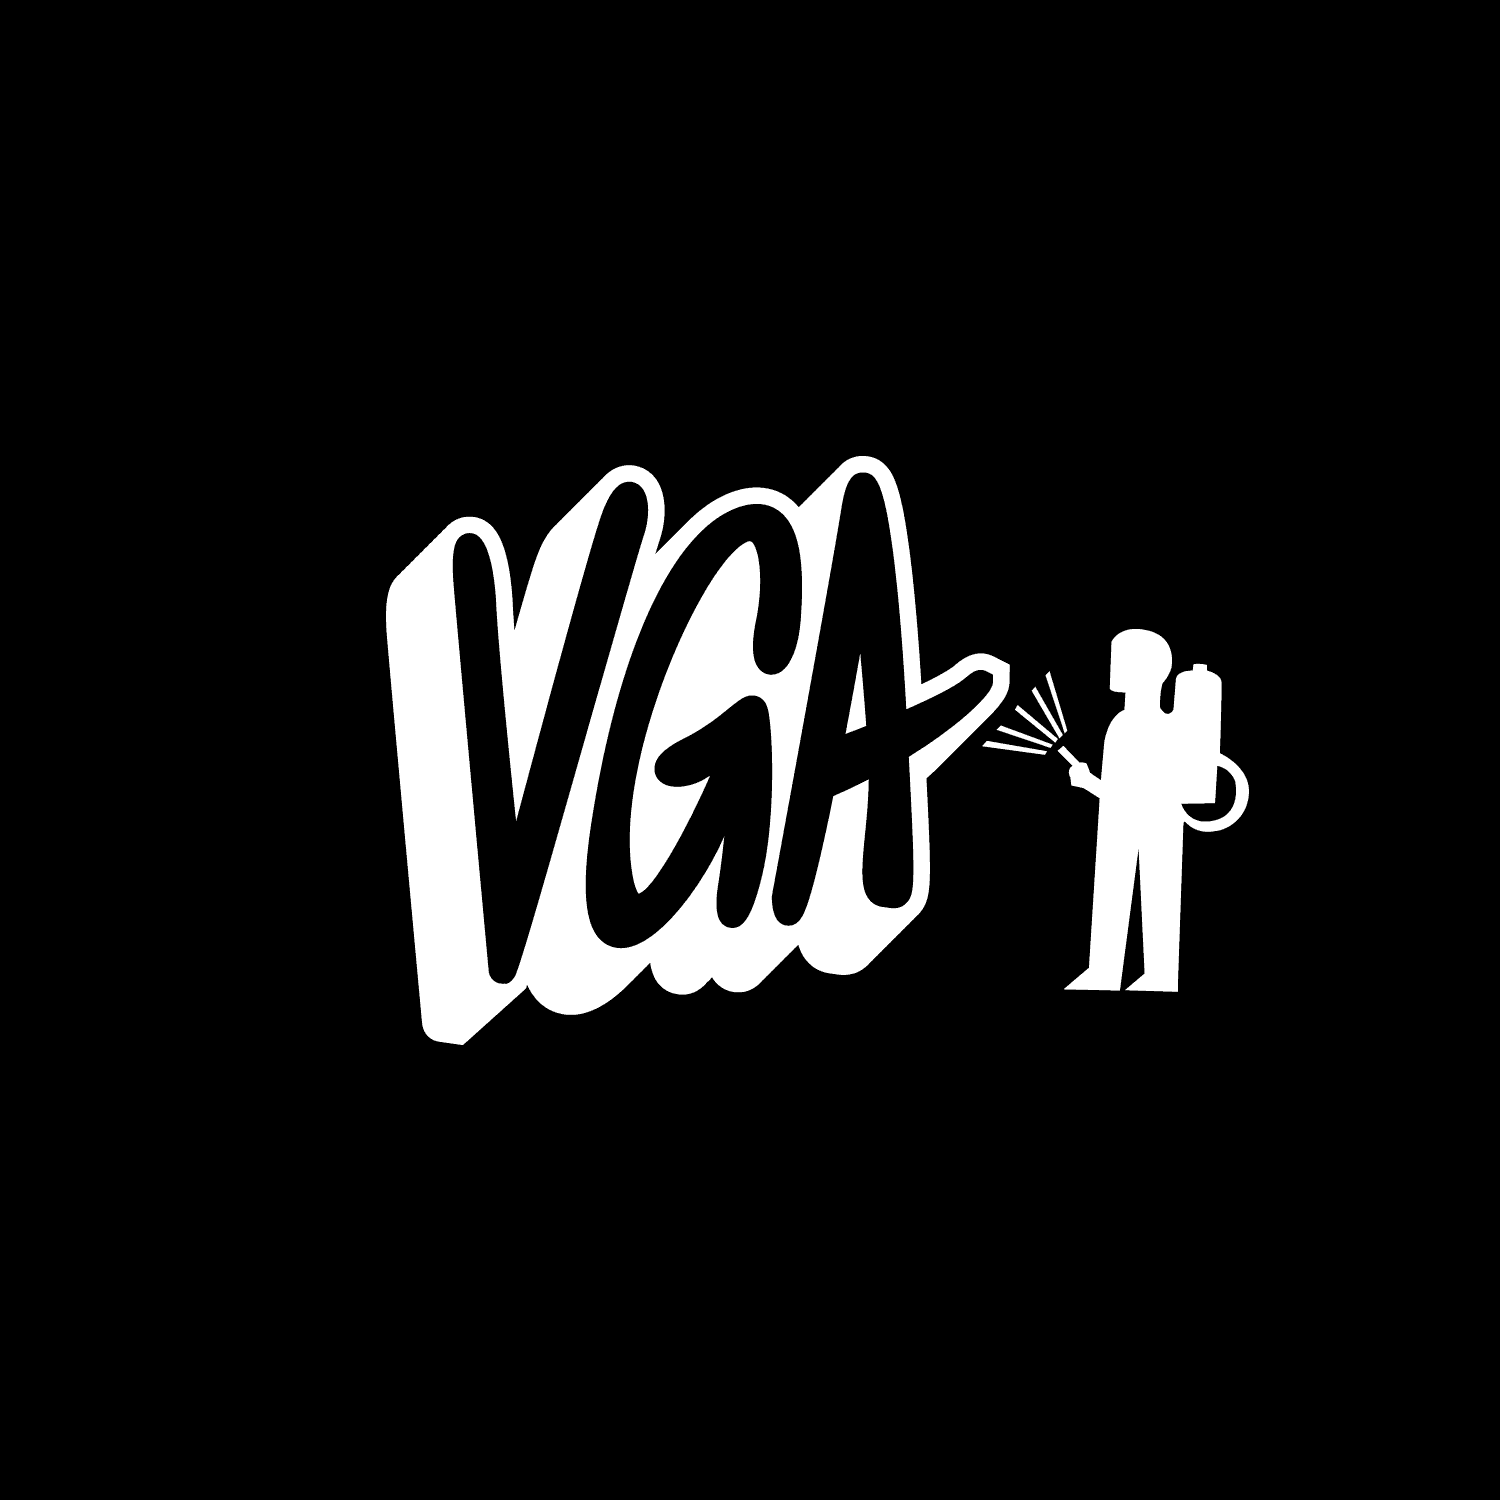 logos-vga-5.png